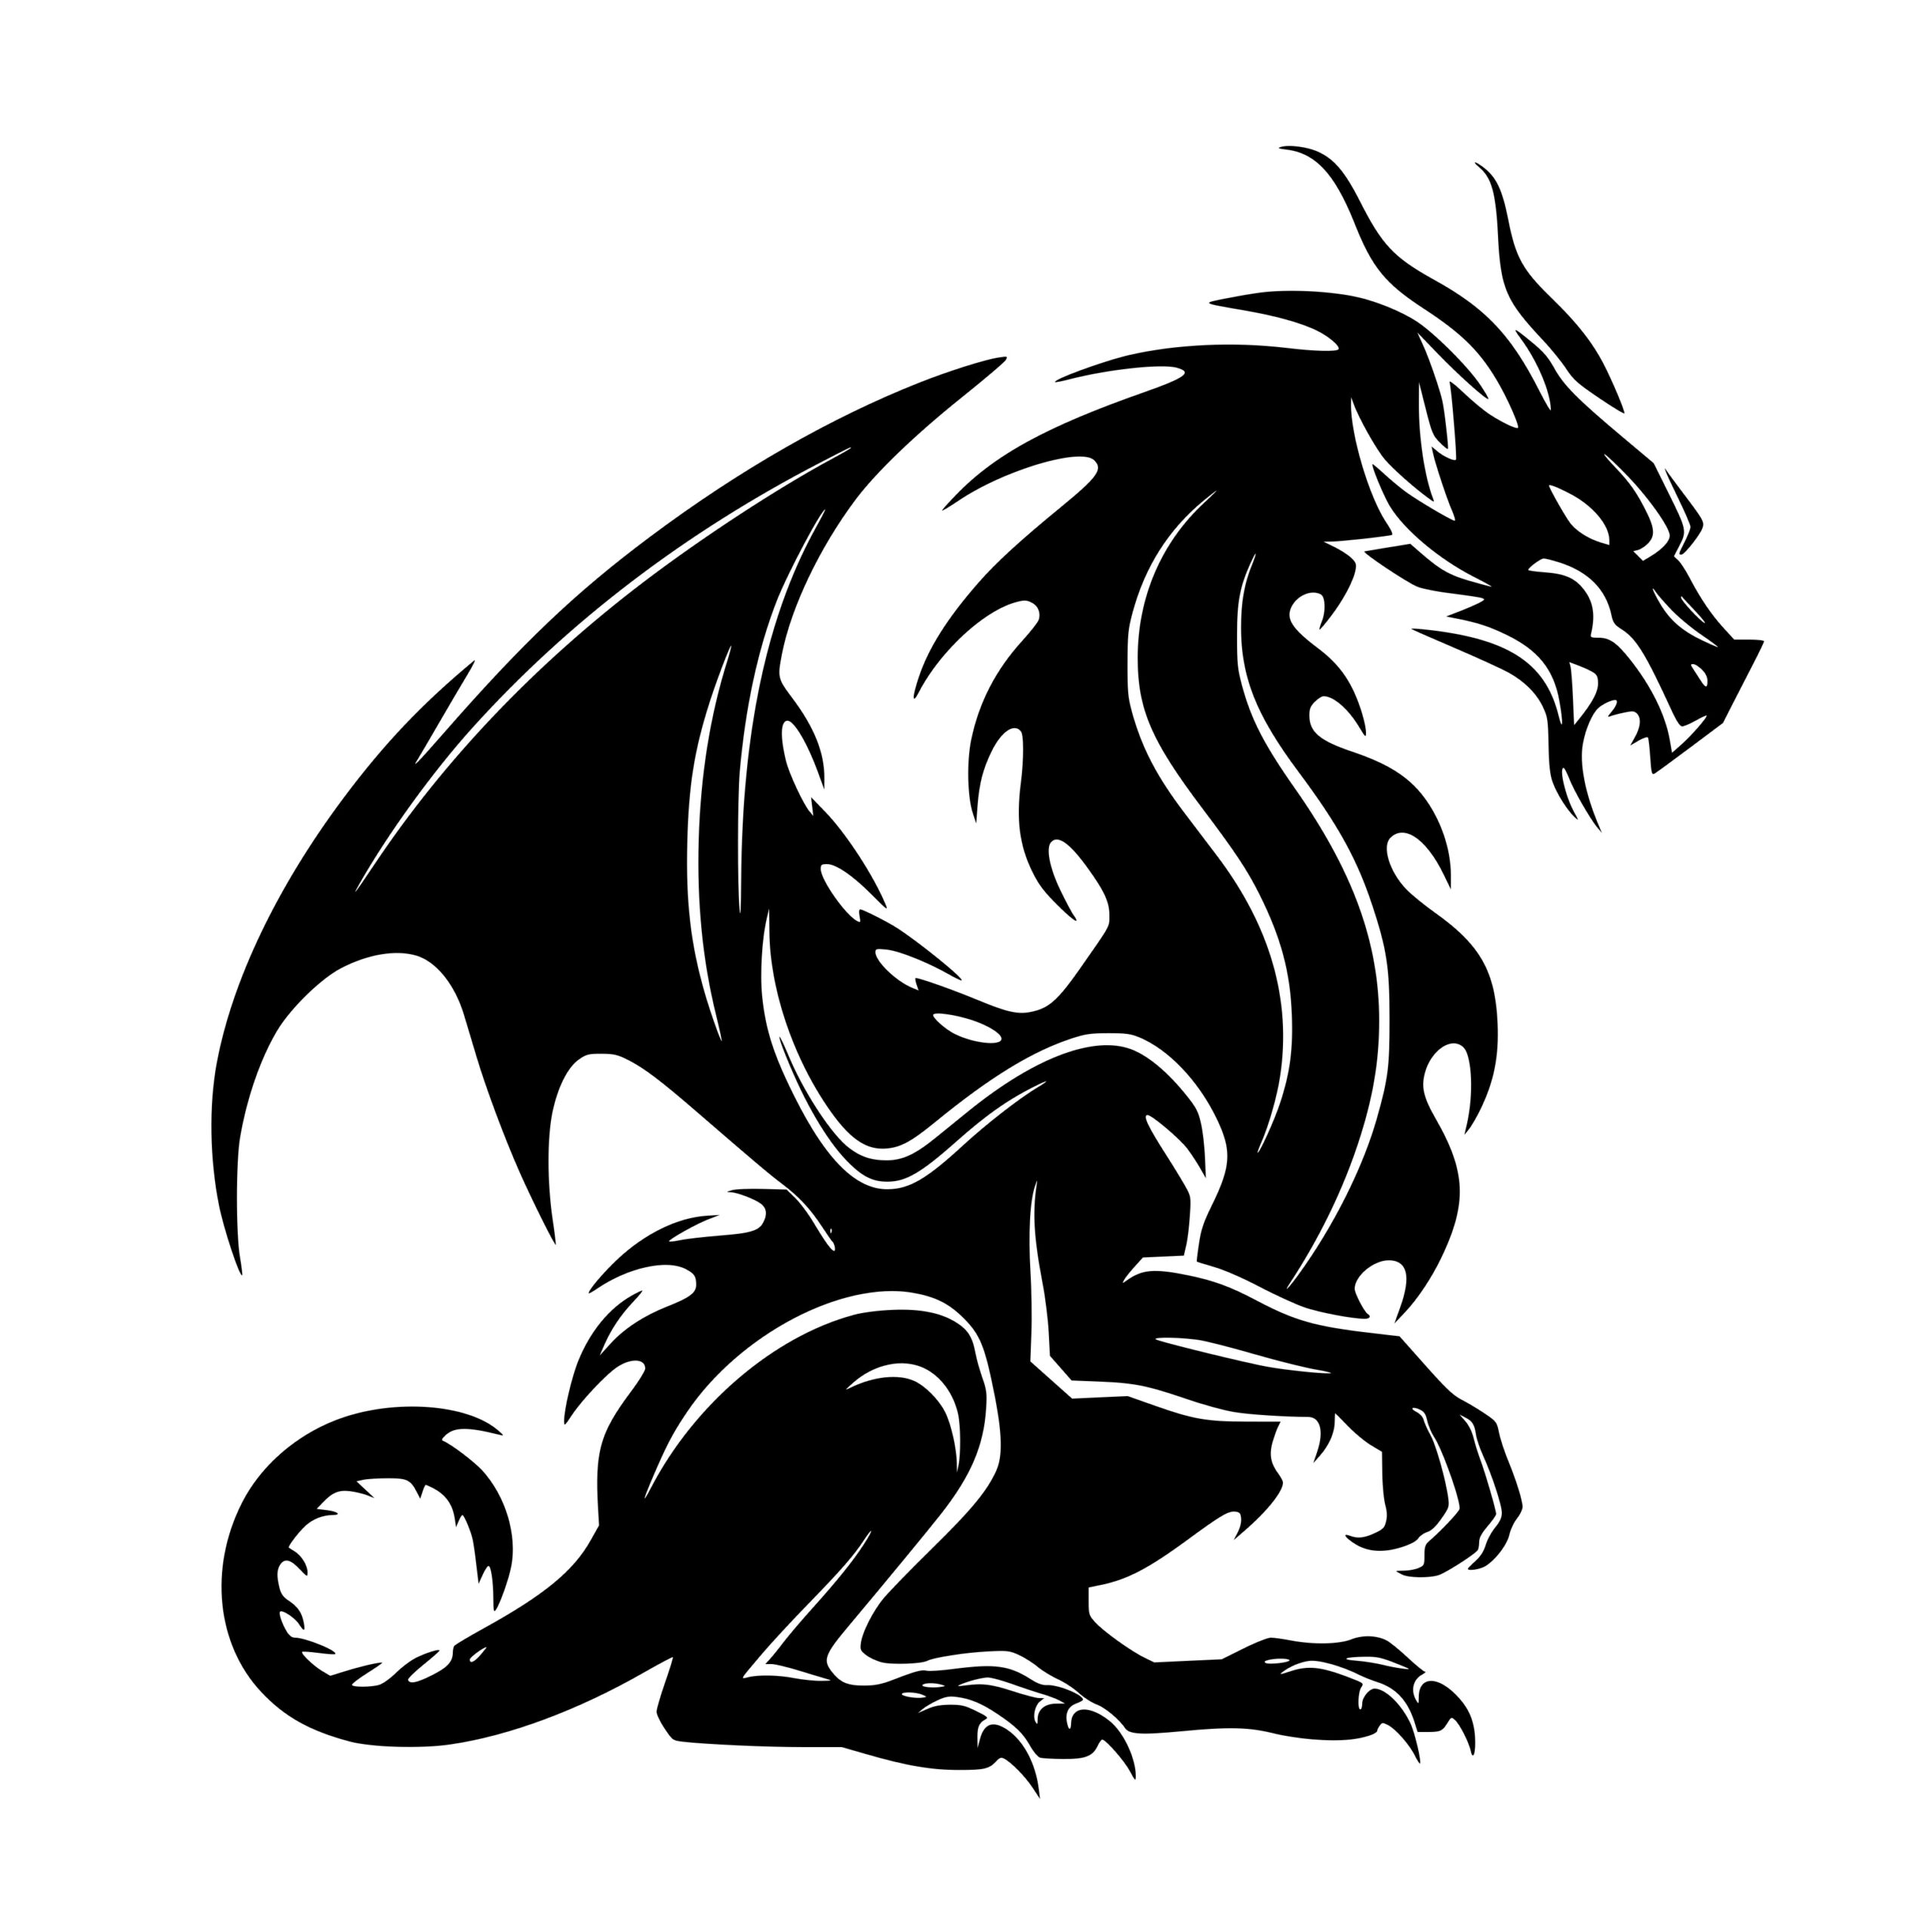 Fantasy Dragon SVG File: Instant Download for Cricut, Silhouette, Laser ...